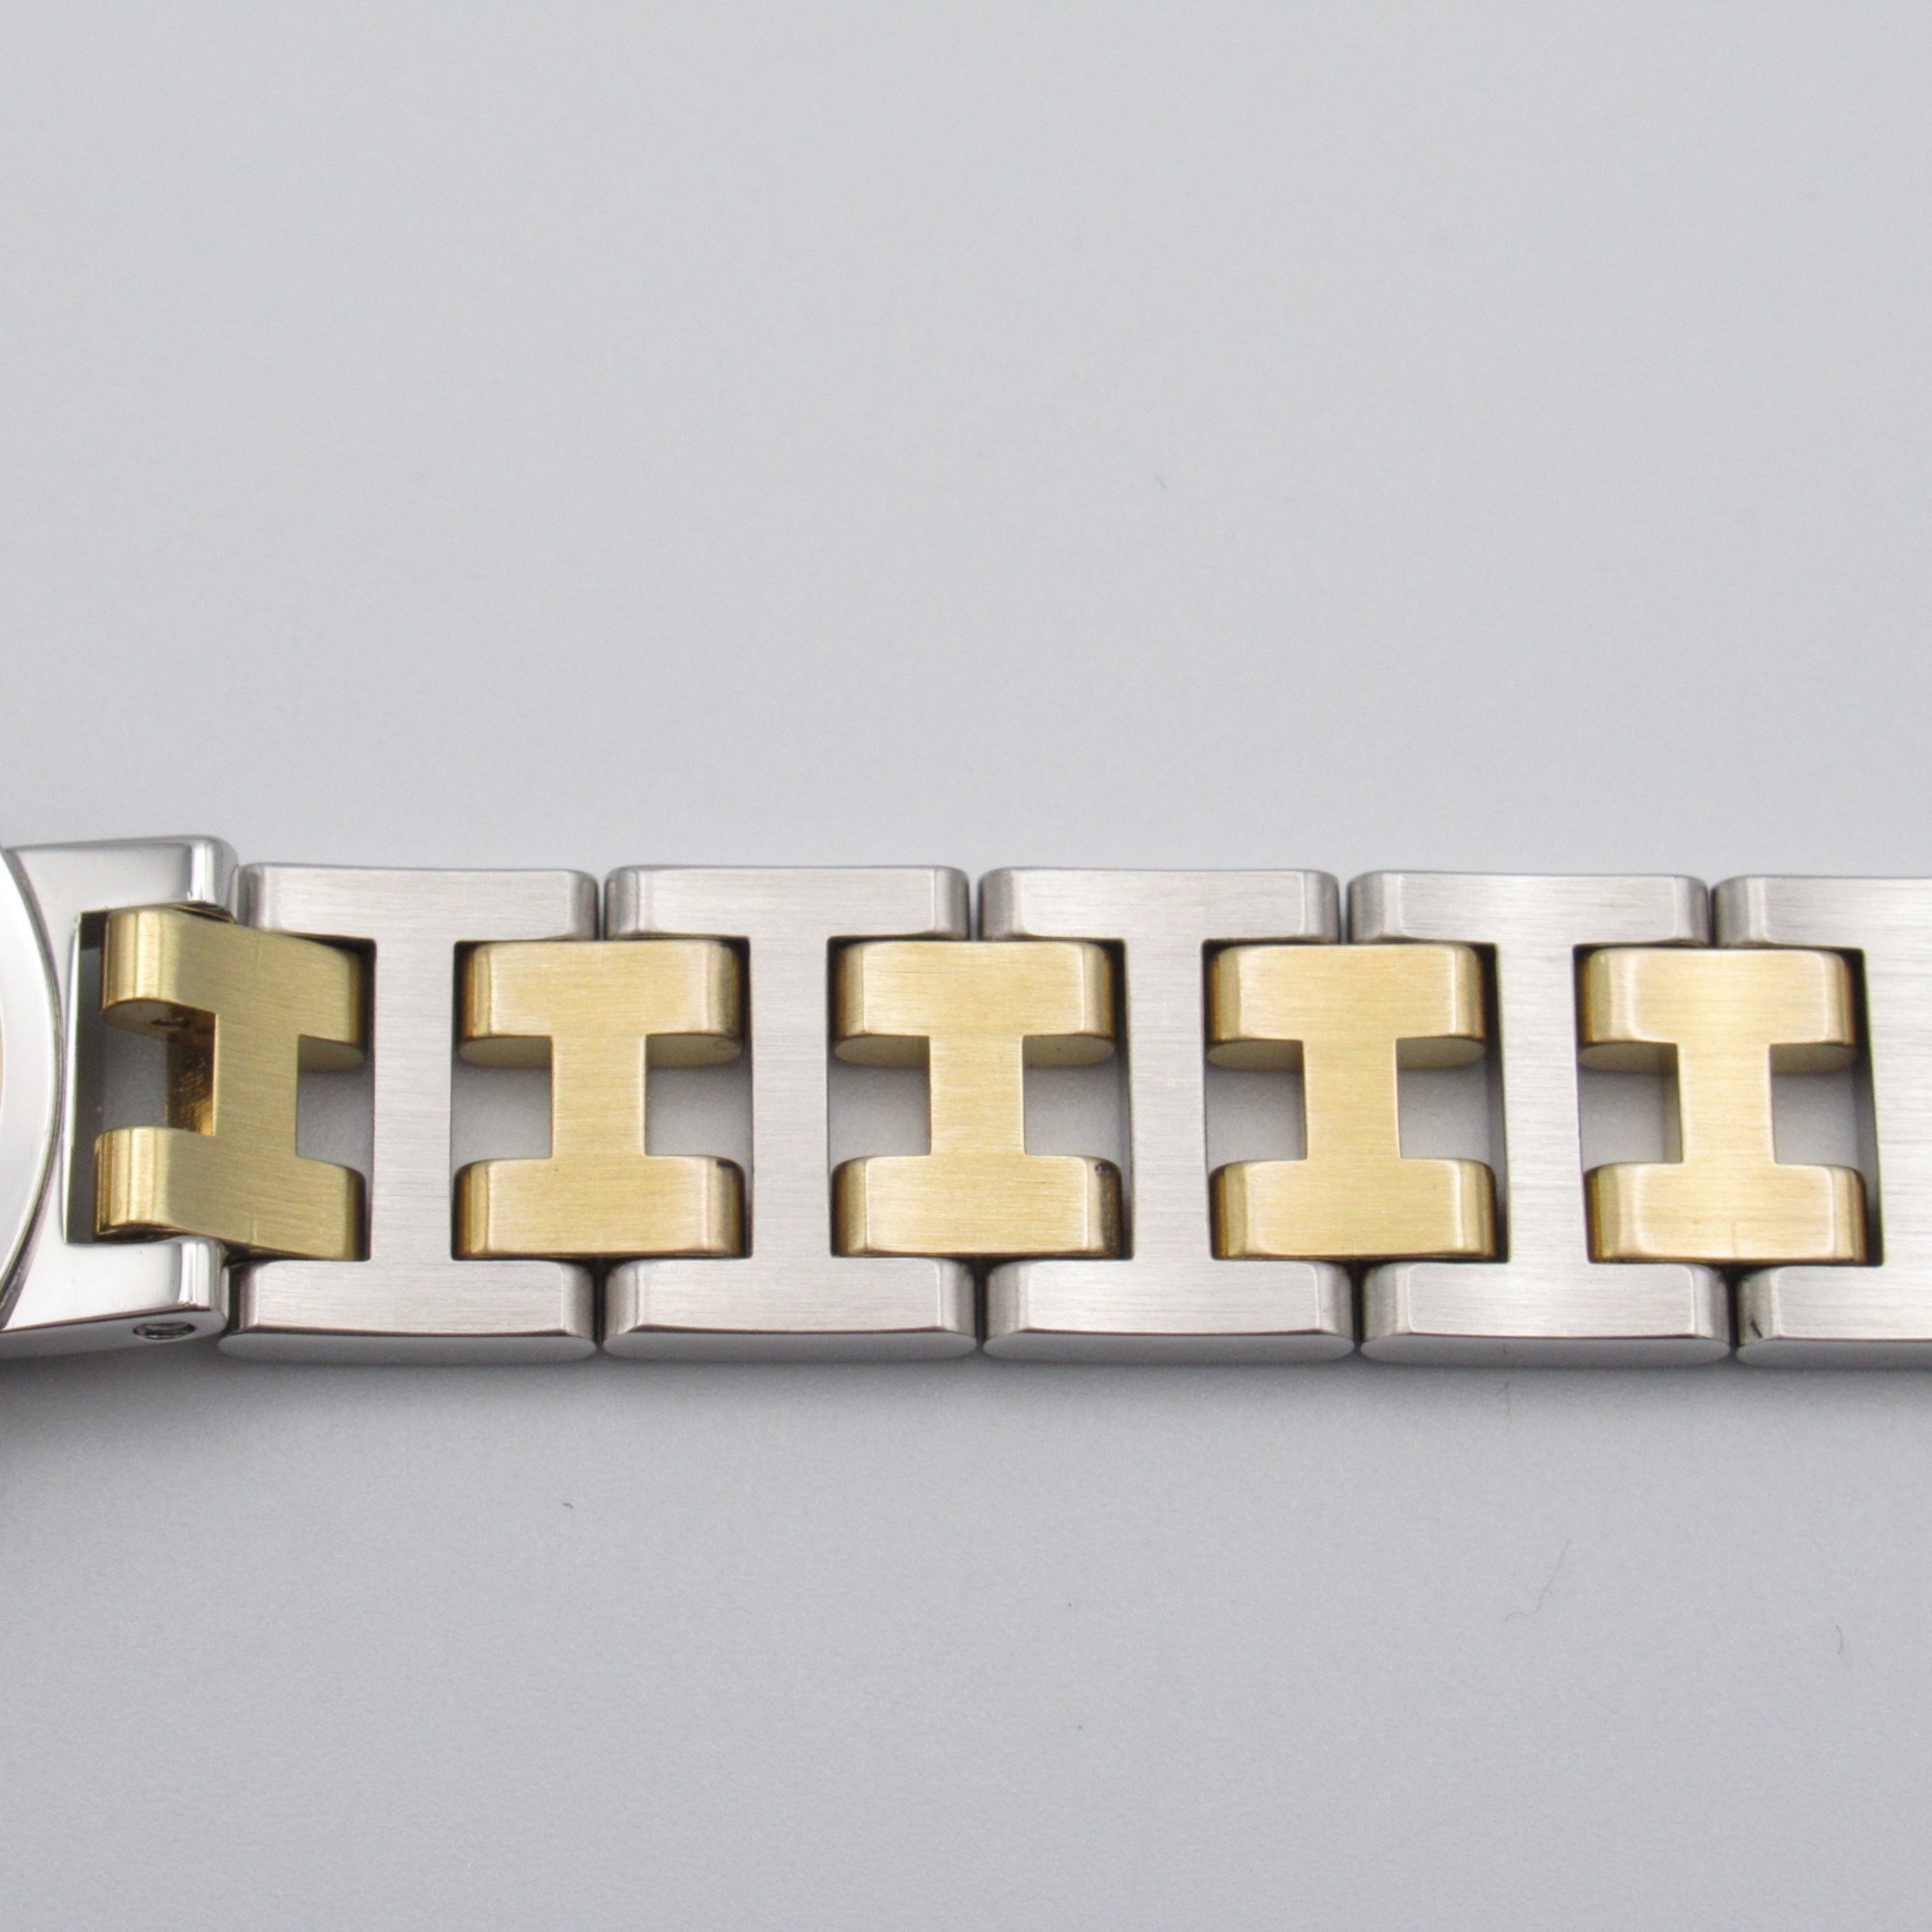 HERMES Clipper Wrist Watch CL2.440 Quartz Beige  Gold Plated Stainless Steel